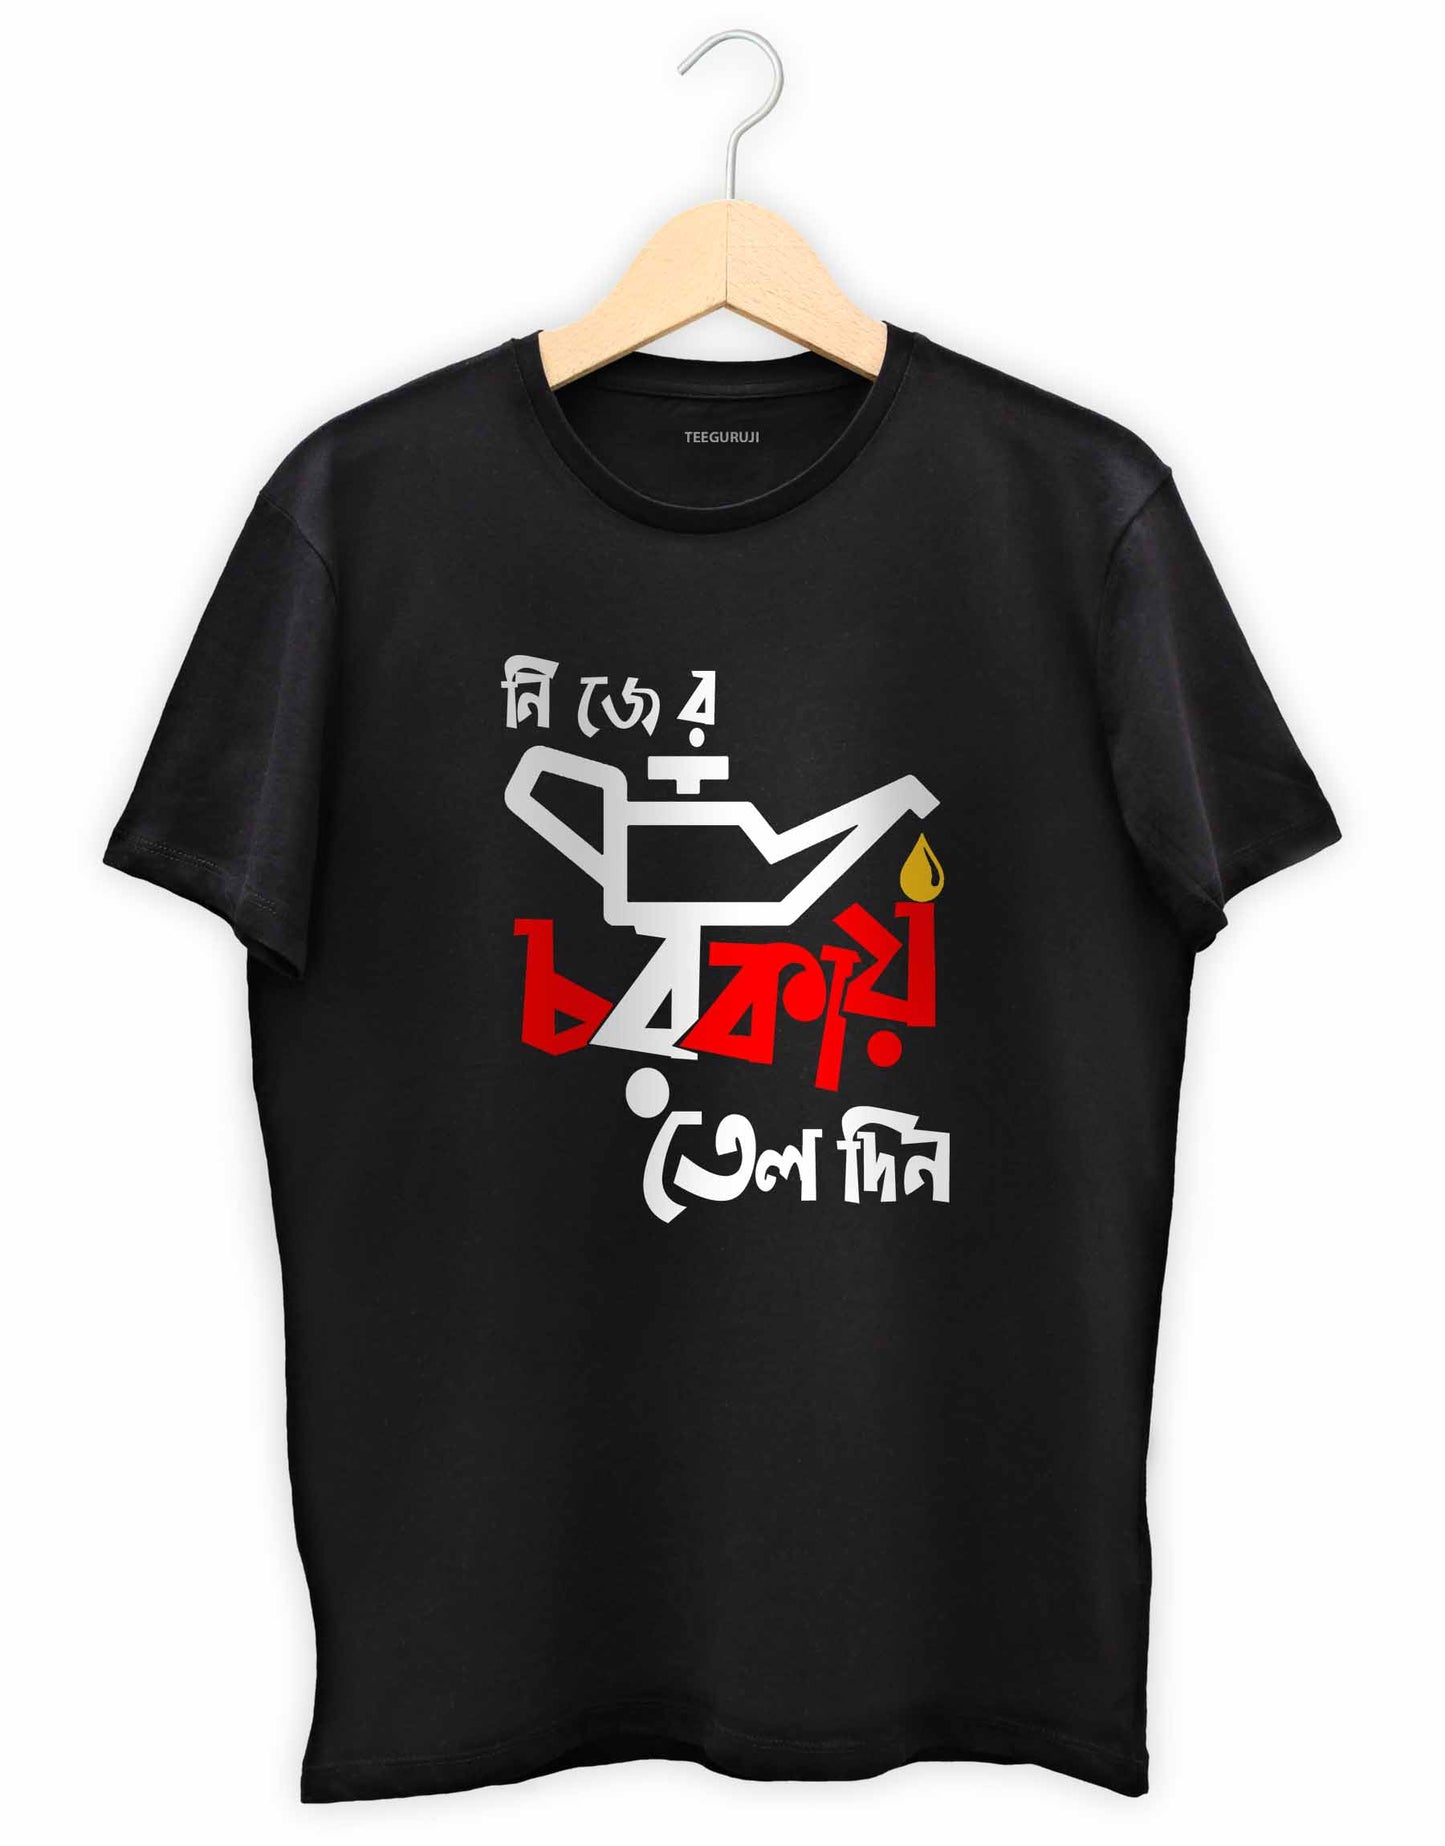 Nijer Chorkay Tel Din TEEGURUJI T-Shirt - 499.00 - TEEGURUJI - Free Shipping